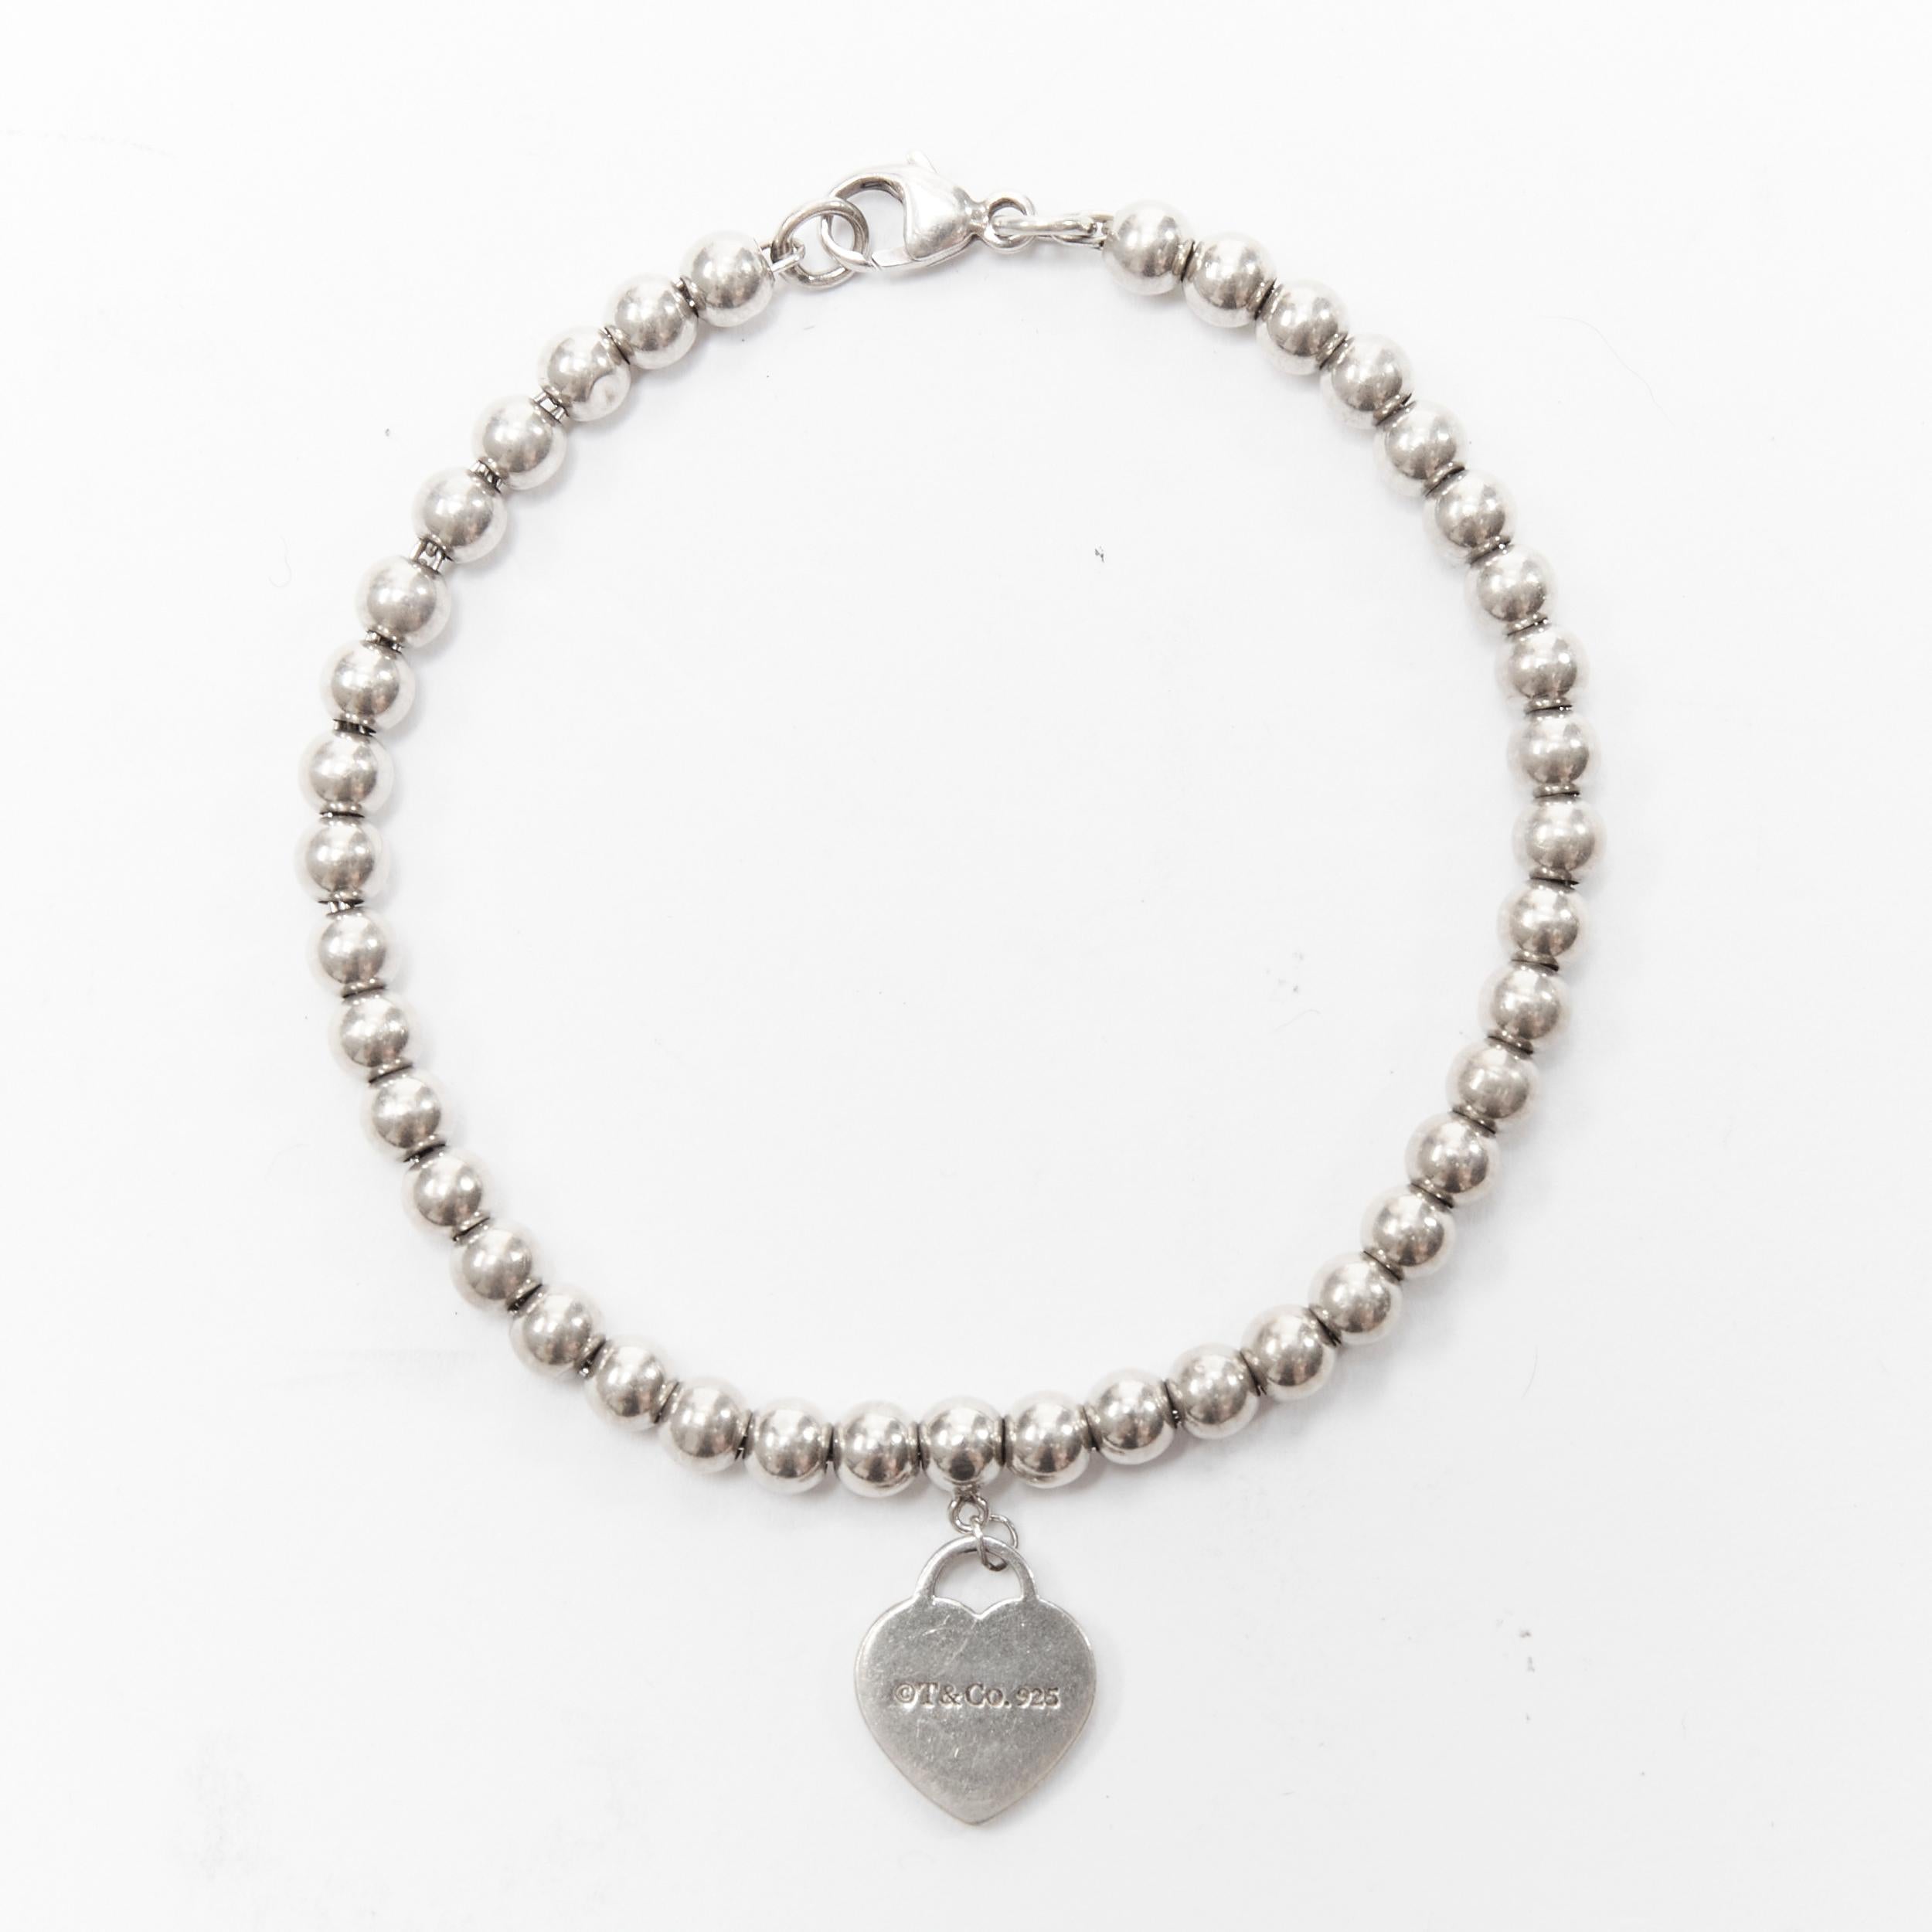 TIFFANY & CO Kidswear Return to heart tag charm bead sterling silver bracelet
